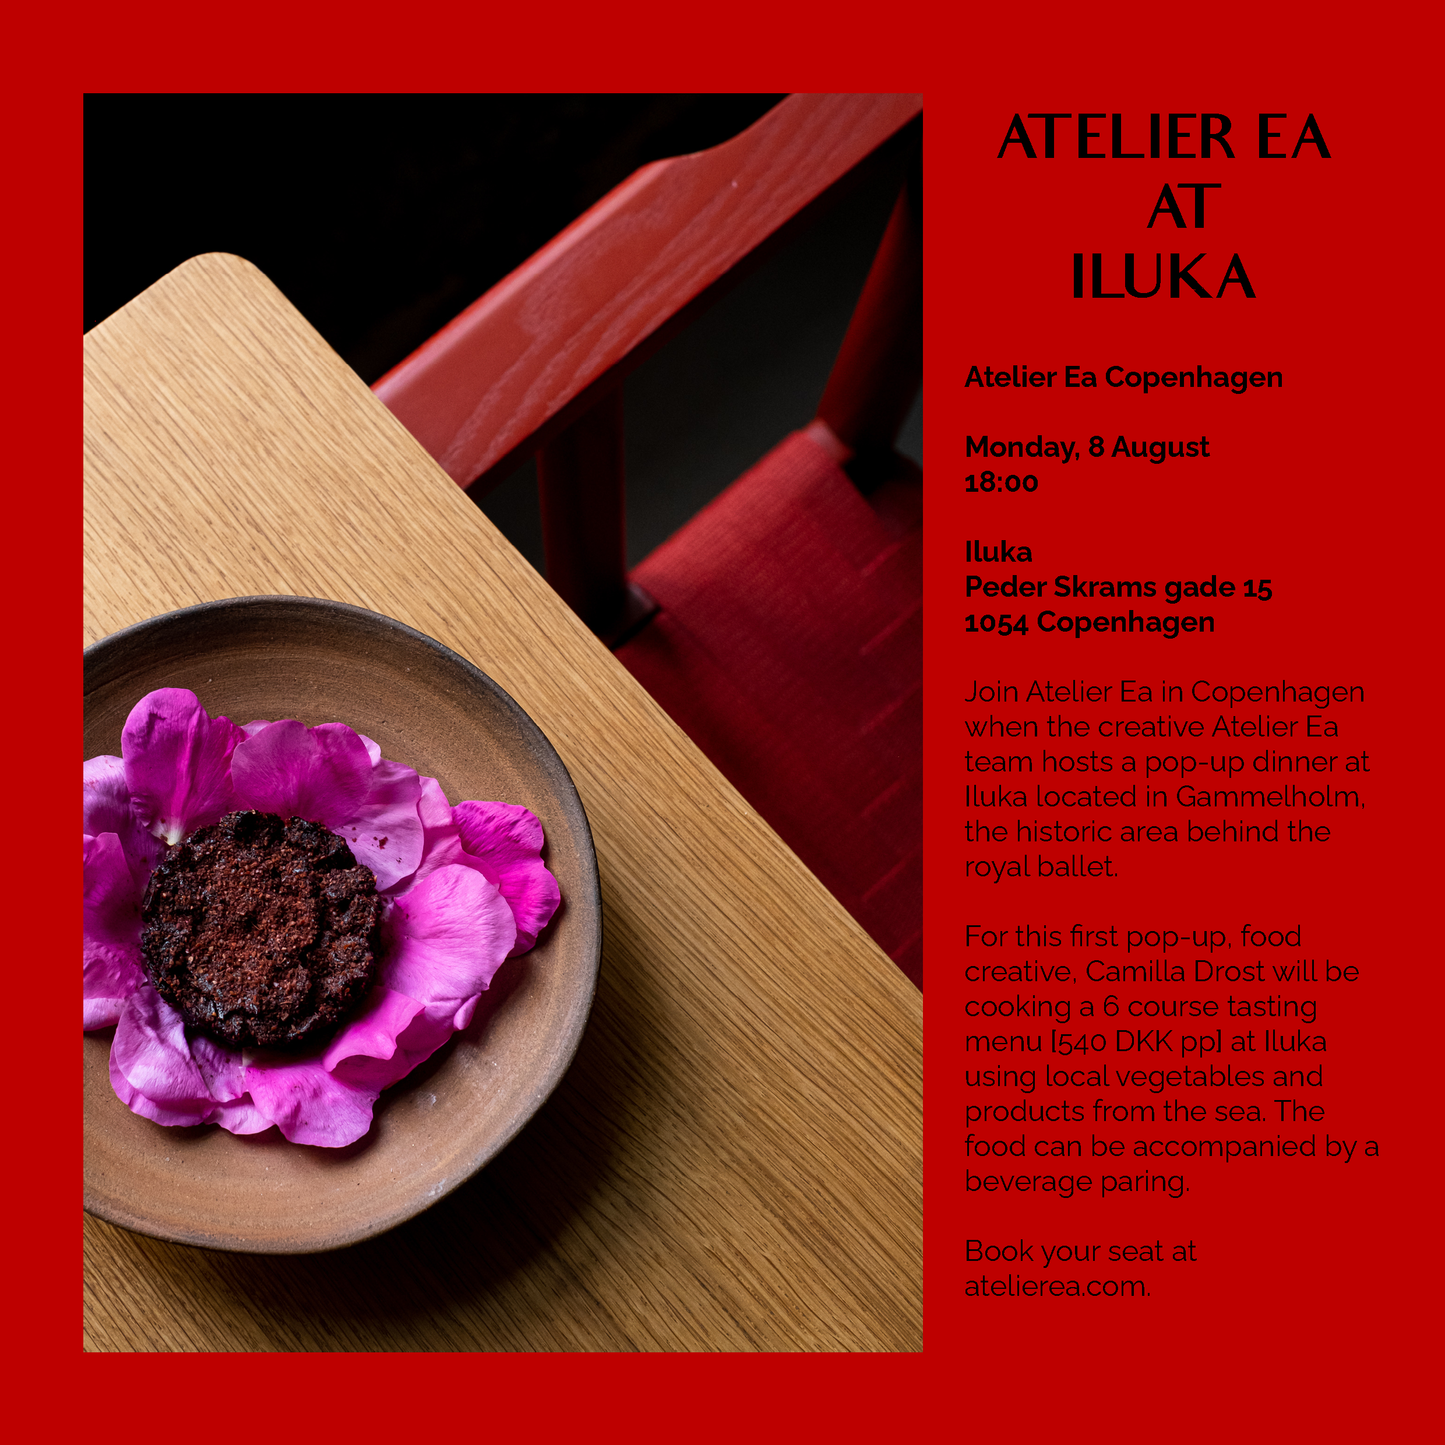 Atelier Ea at Iluka Pop-up dinner (6-course menu)